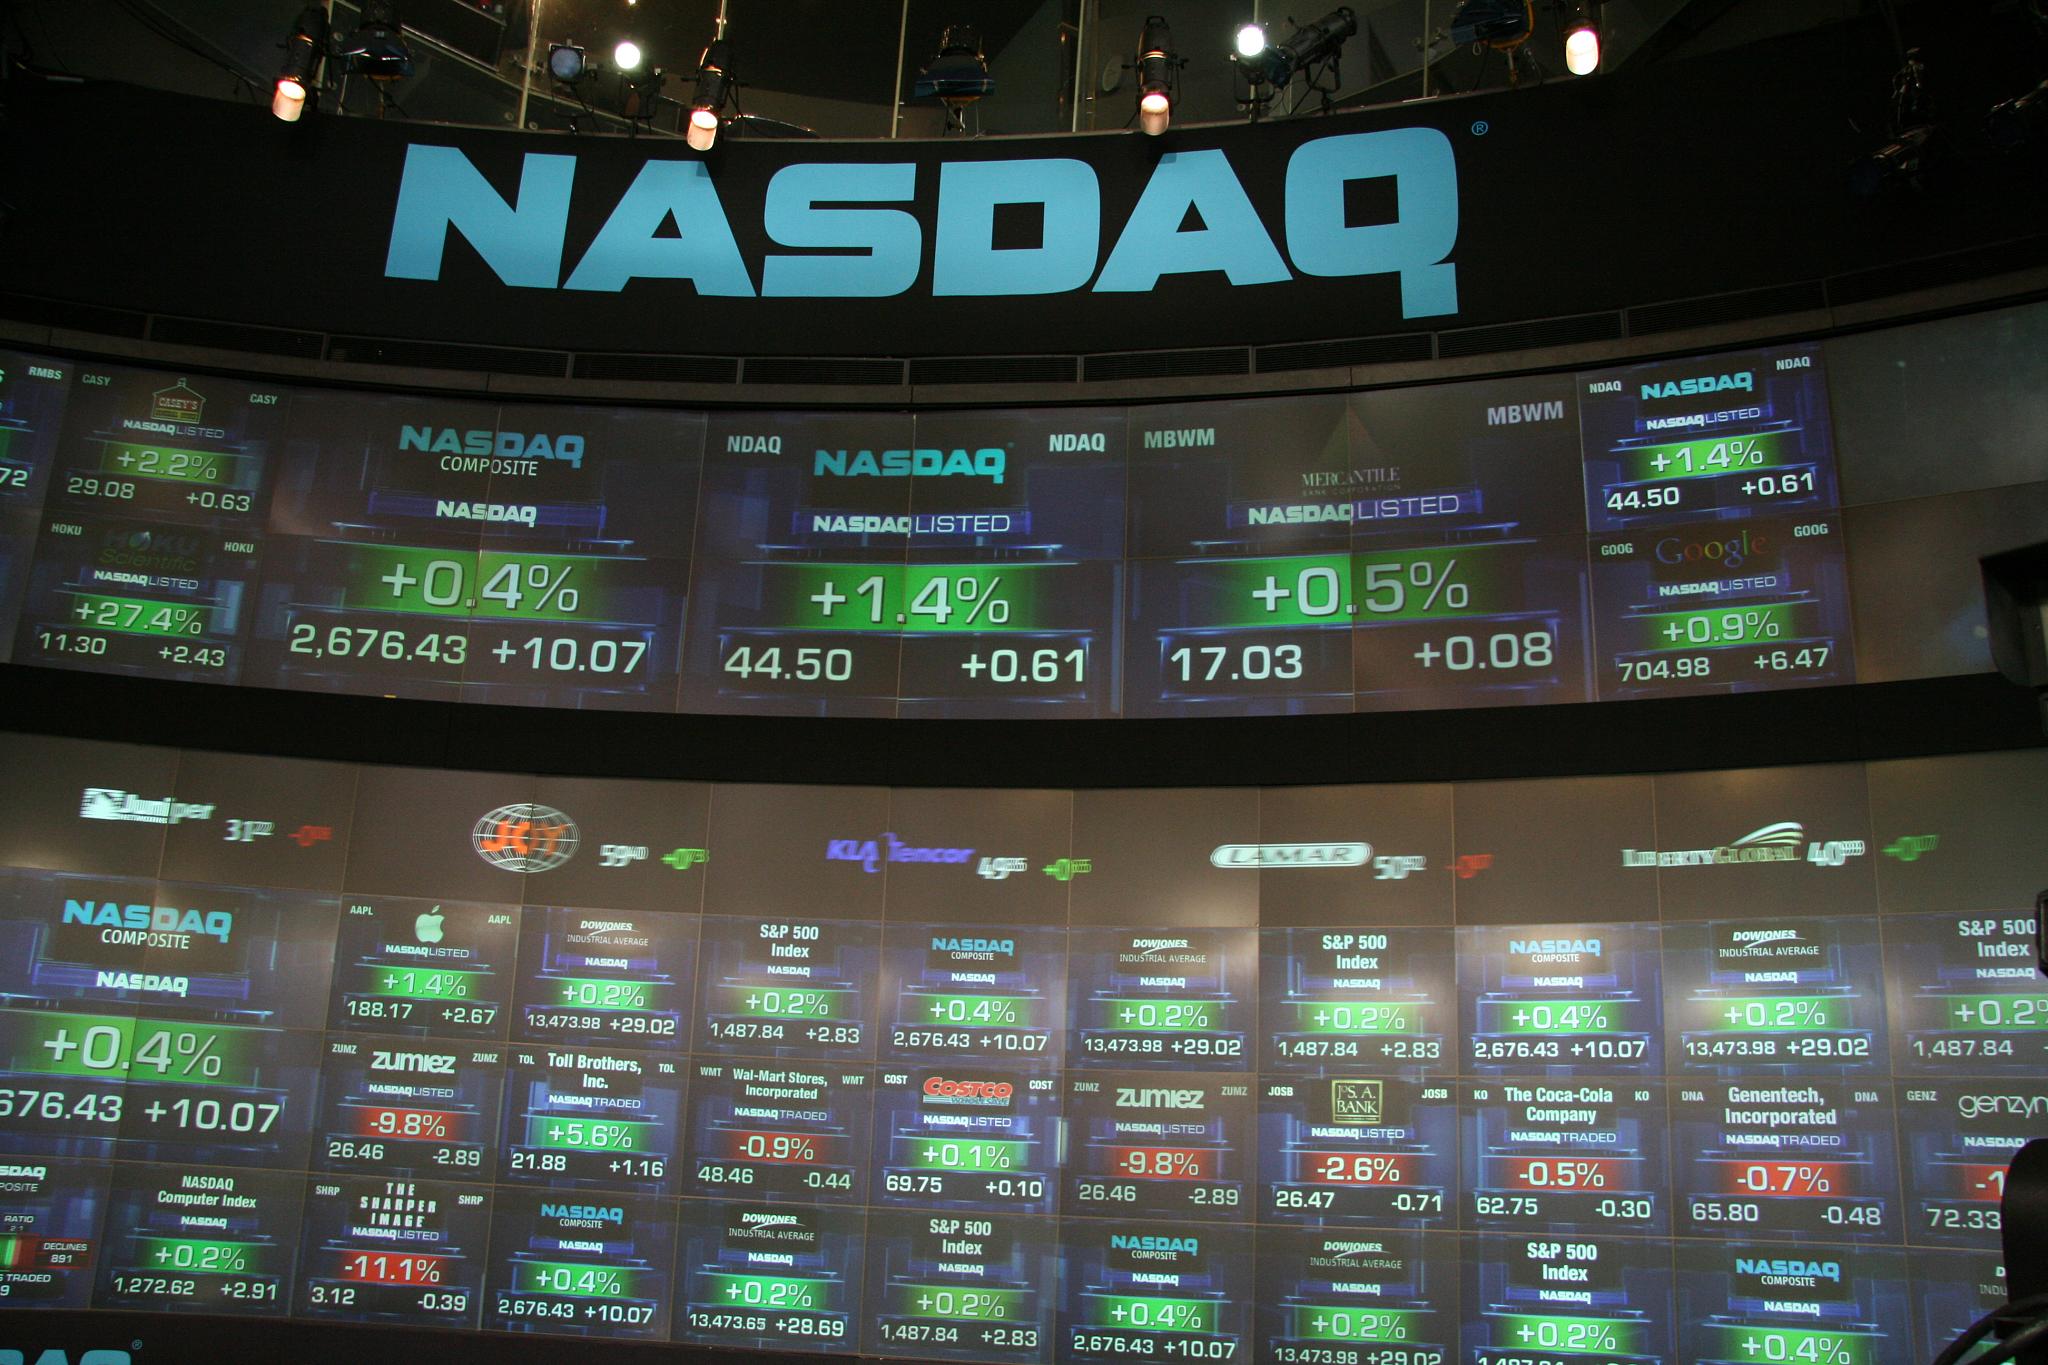 Screen of Nasdaq stock tickers